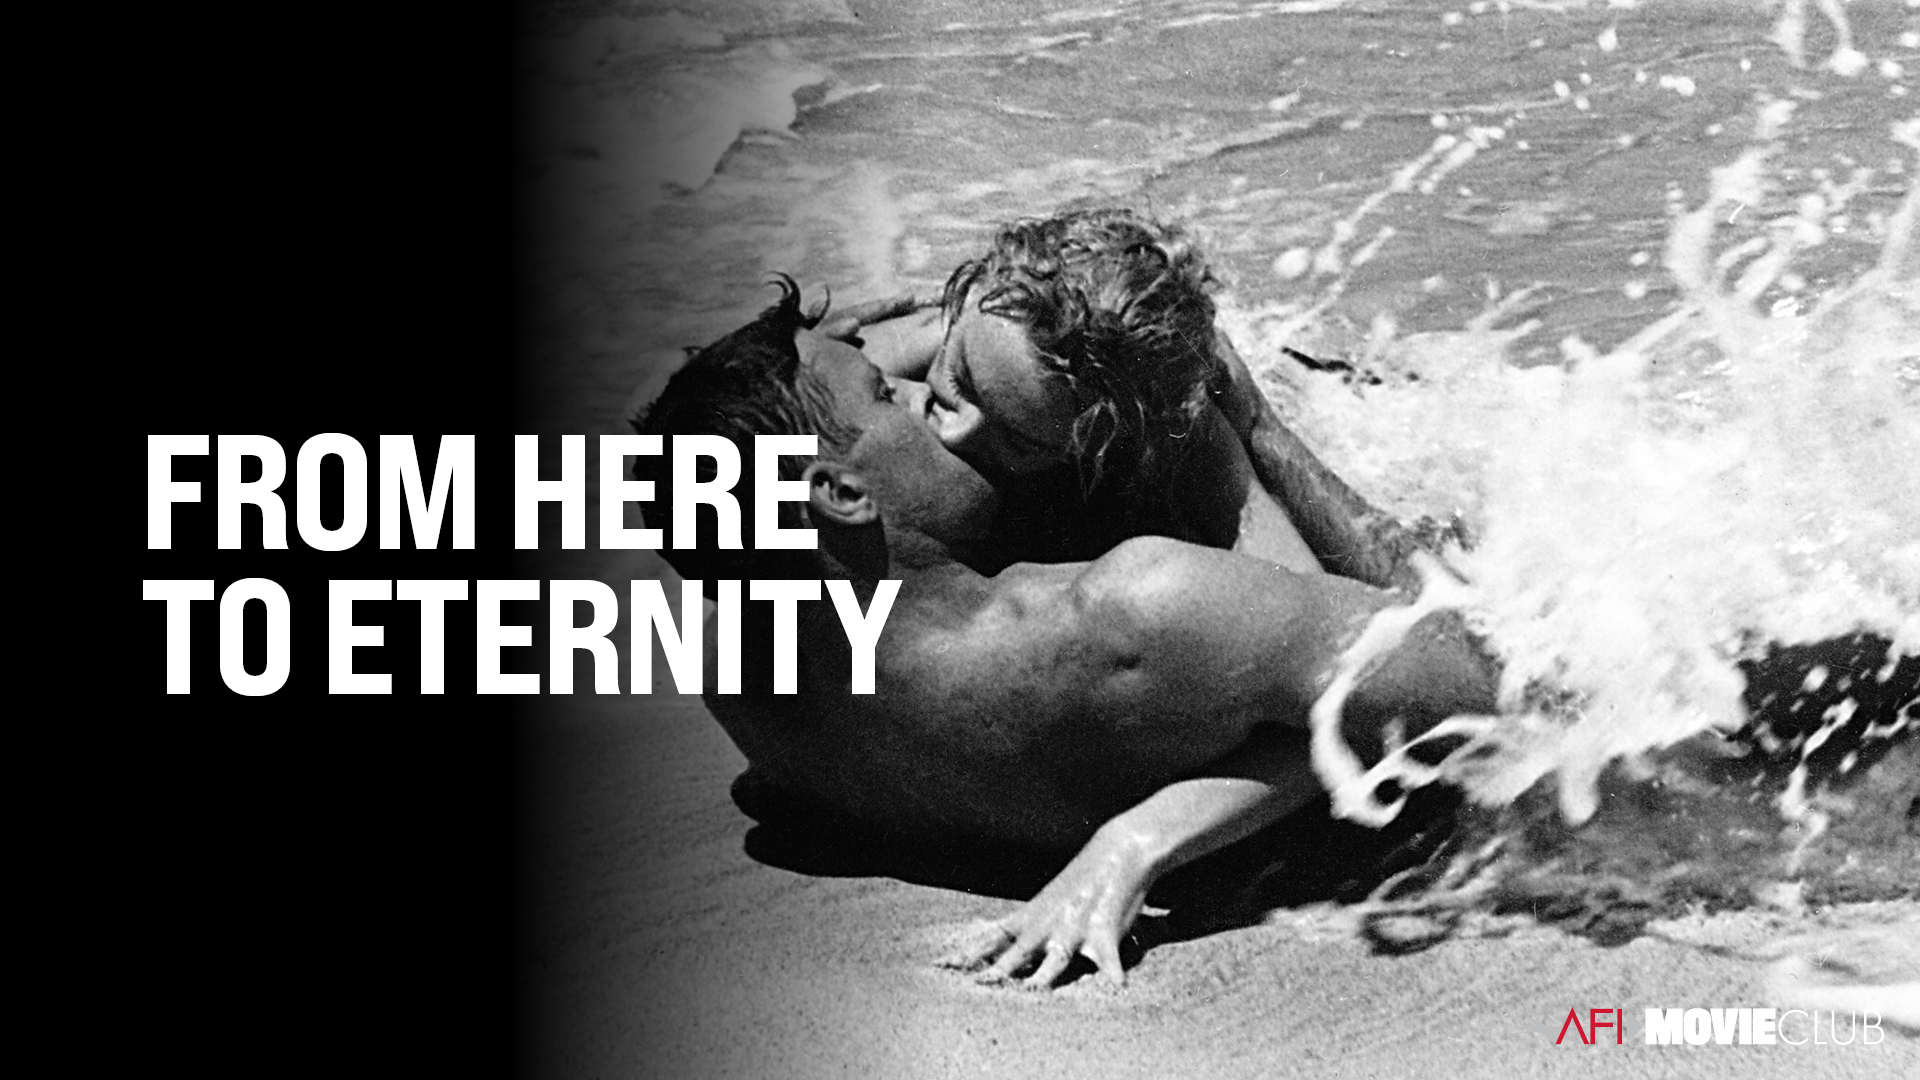 From Here to Eternity Film Still - Deborah Kerr and Burt Lancaster